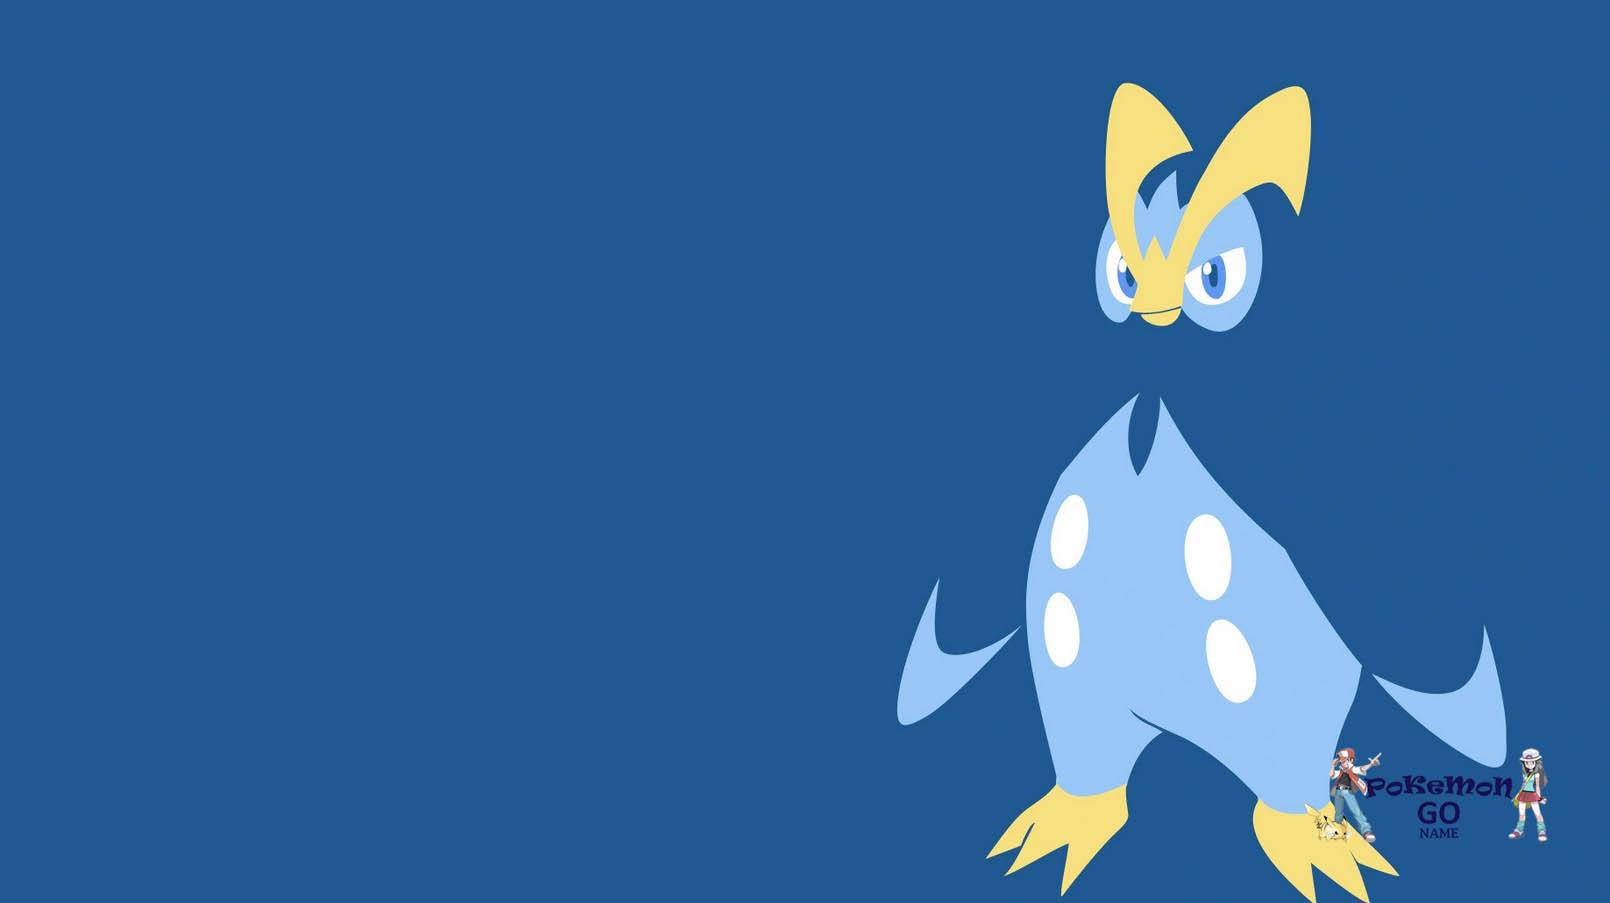 Pokémon GO Prinplup Raid Boss Top Counters Solo Guide: a quién vencer a Prinplup